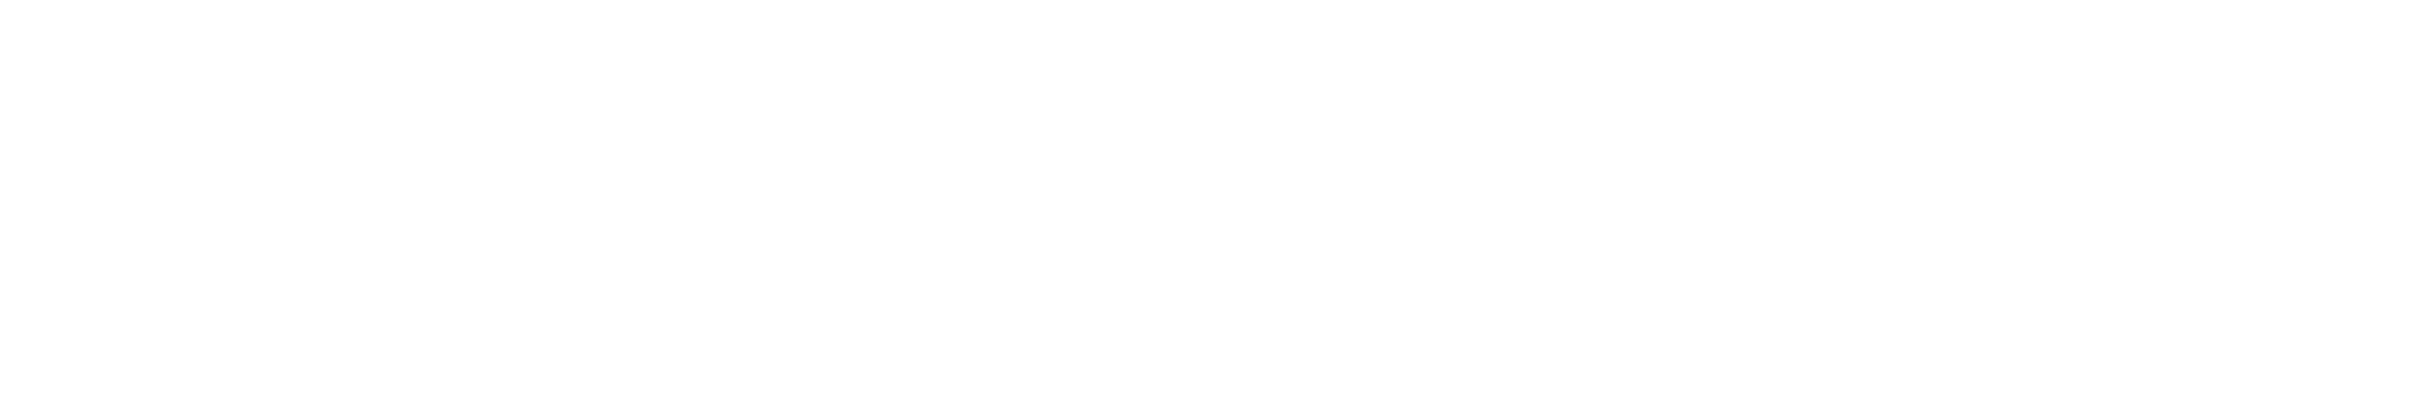 Logo_Freudenberg